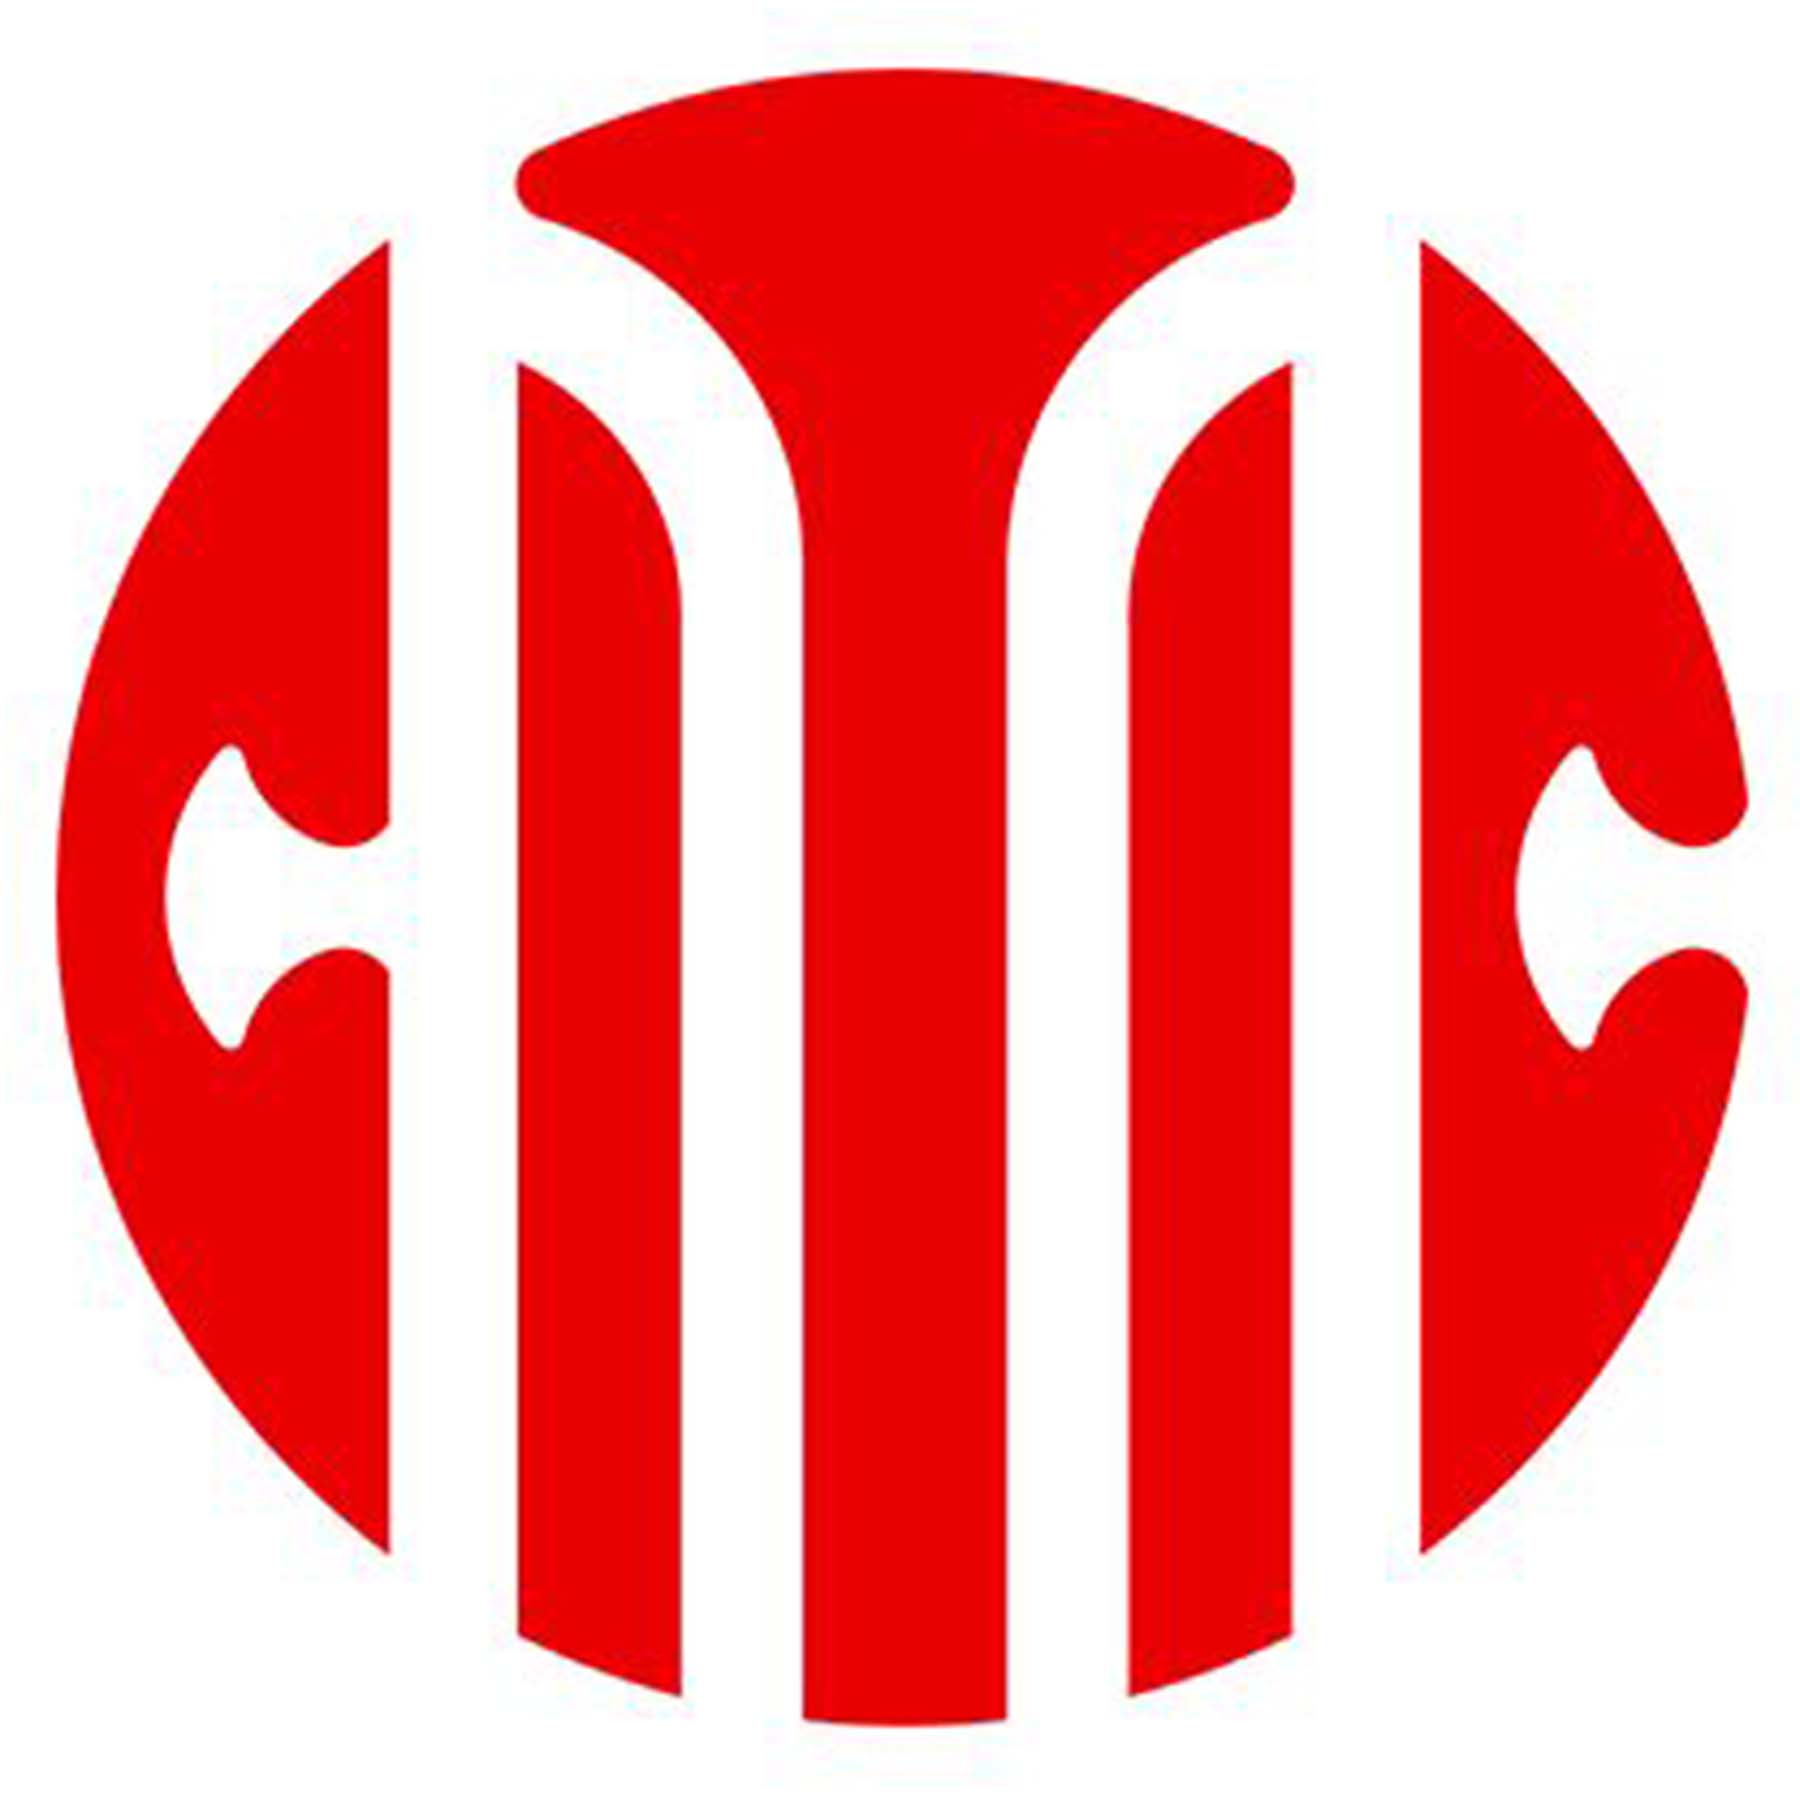 Citic bank. CITIC Bank International. CITIC логотип. Красный логотип банка. Китайские логотипы банков.